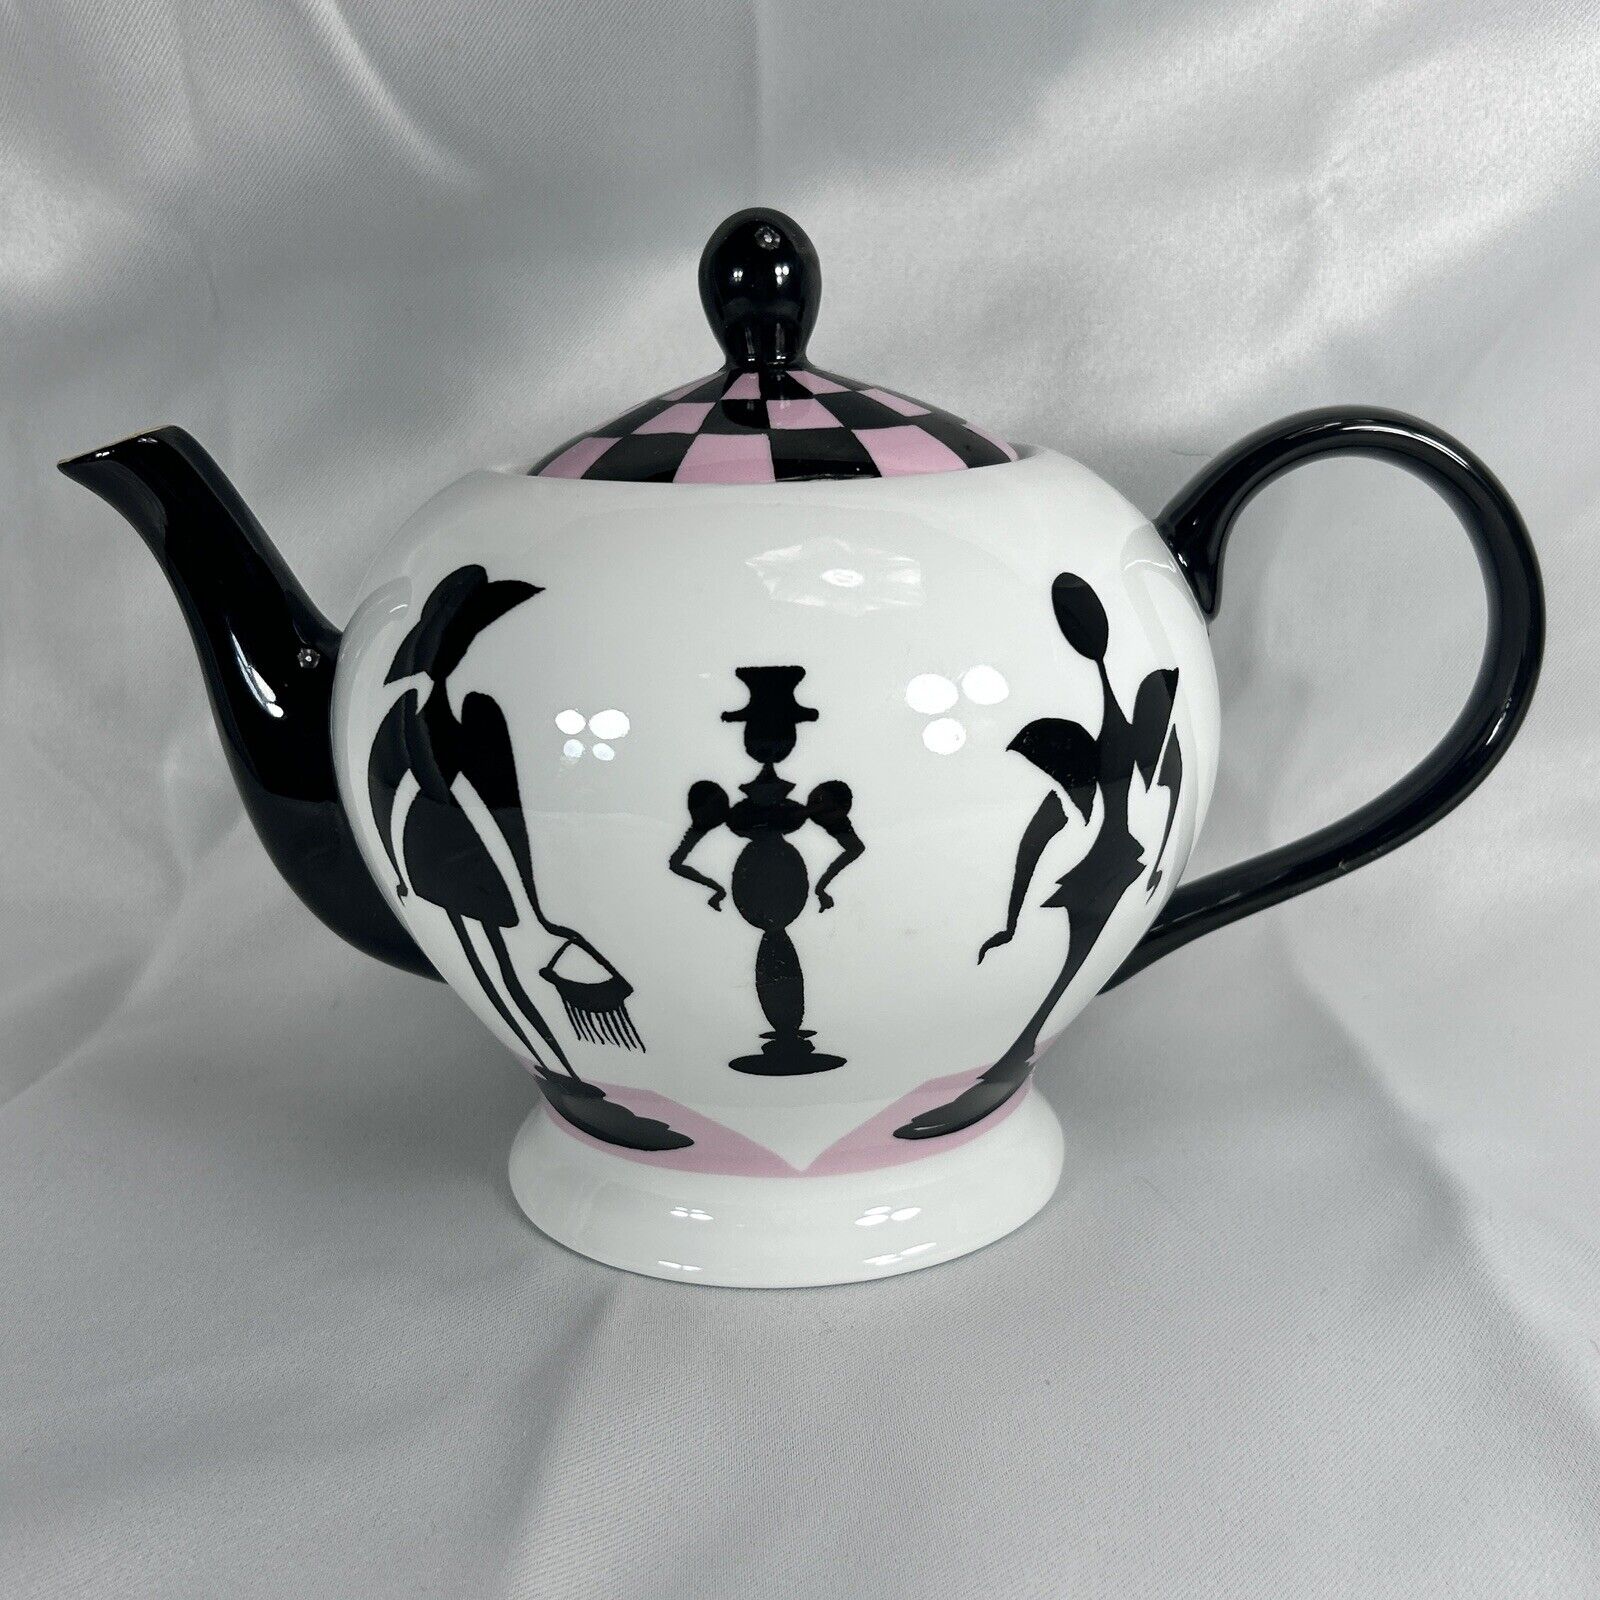 Nordstrom RUBIN TOLEDO Checkered Art Deco Ceramic Teapot w/Lid Silhouettes 48 oz